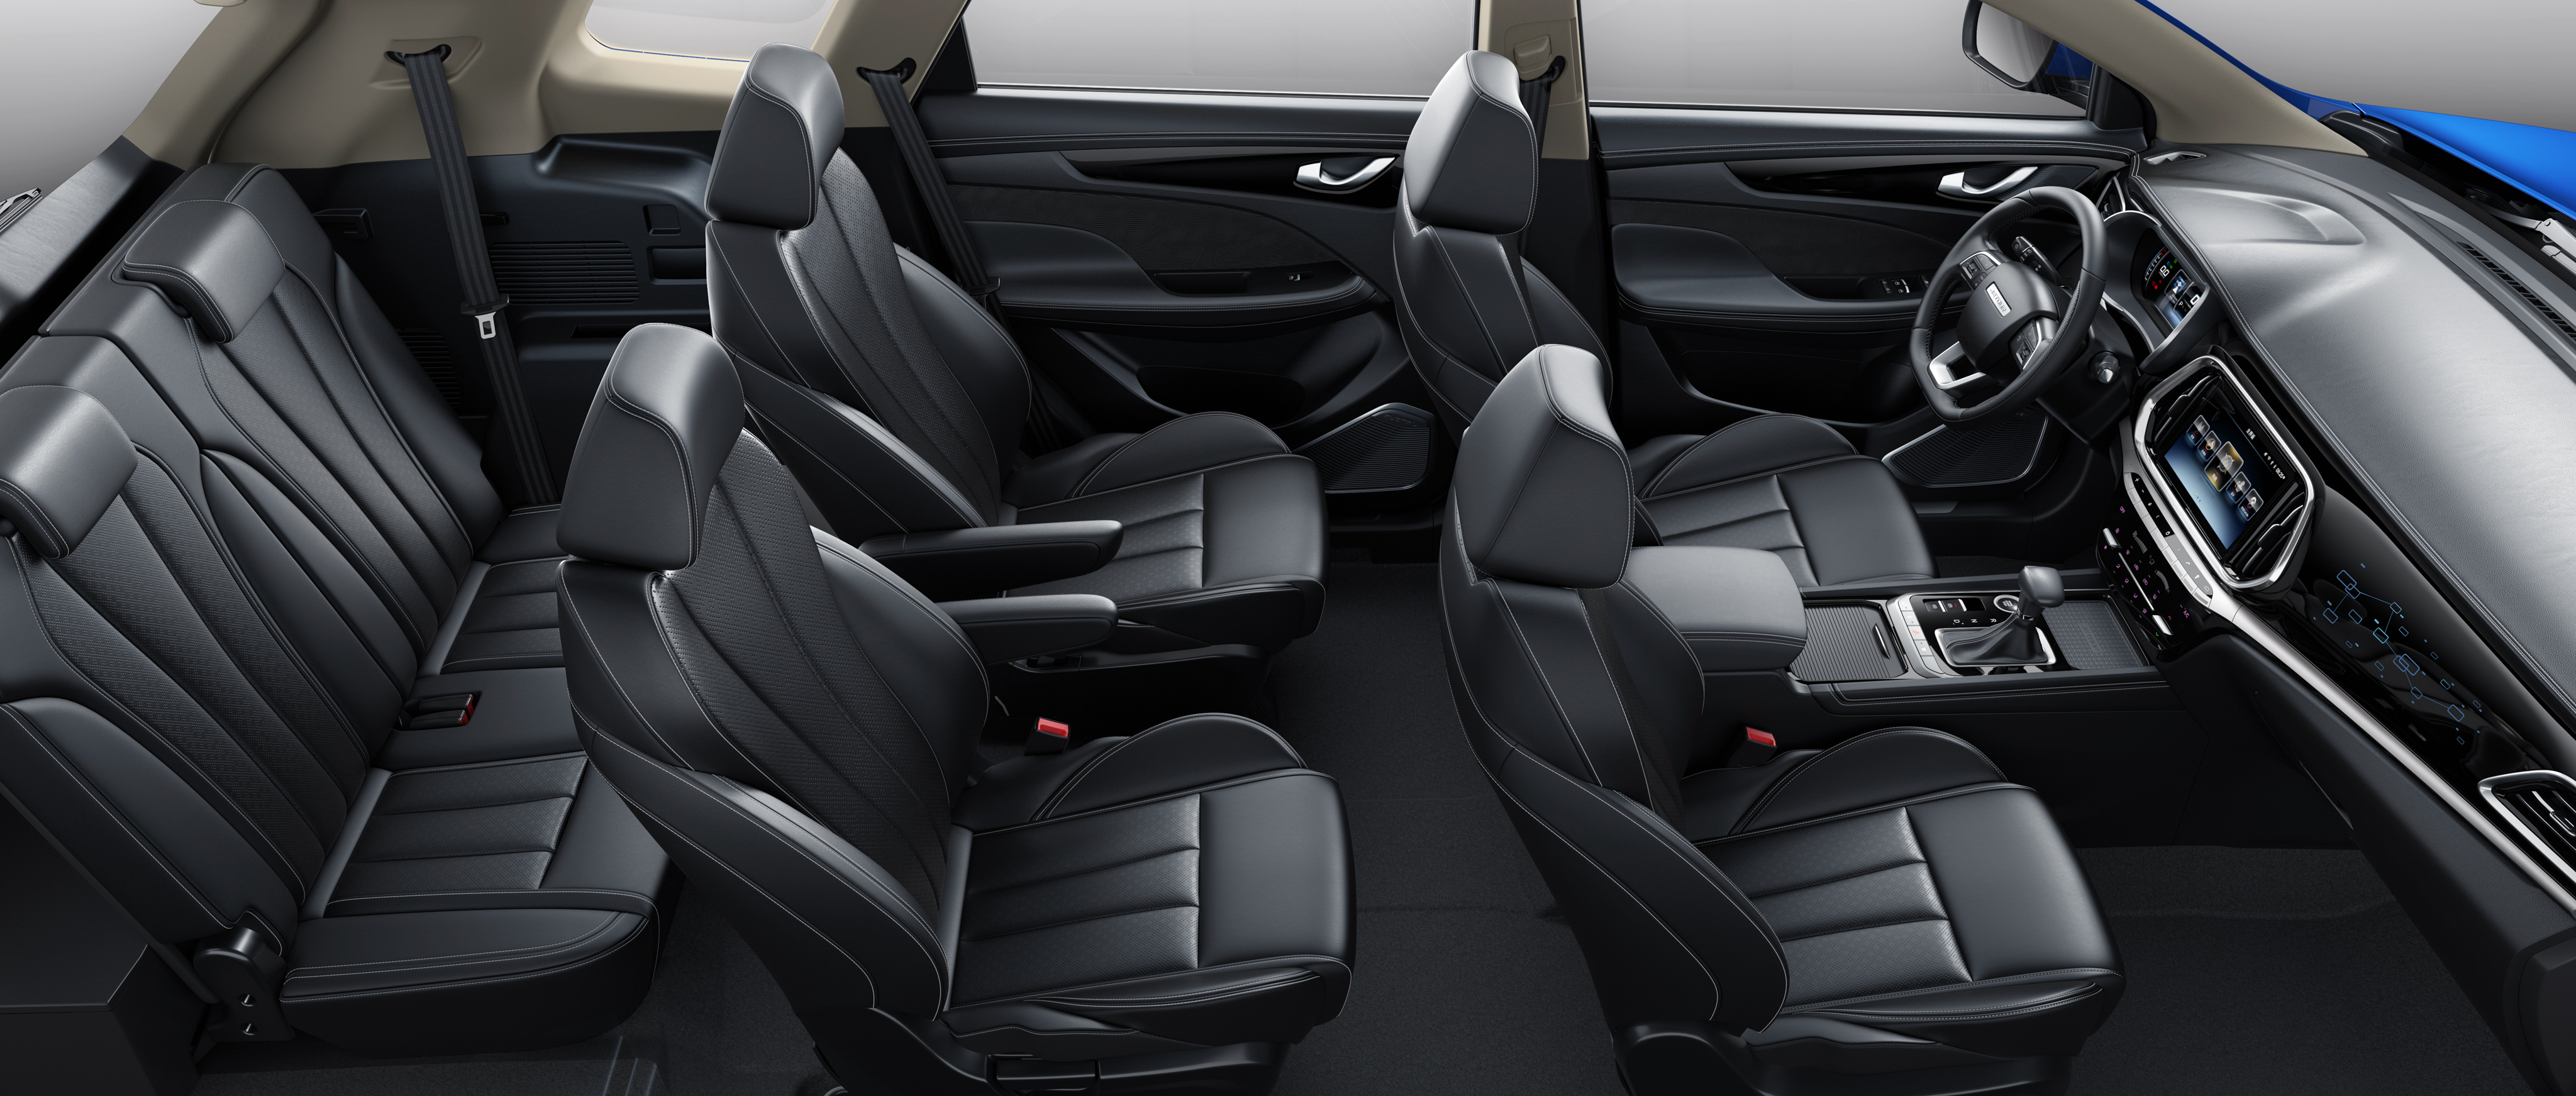 Jetour X90 interior - Seats